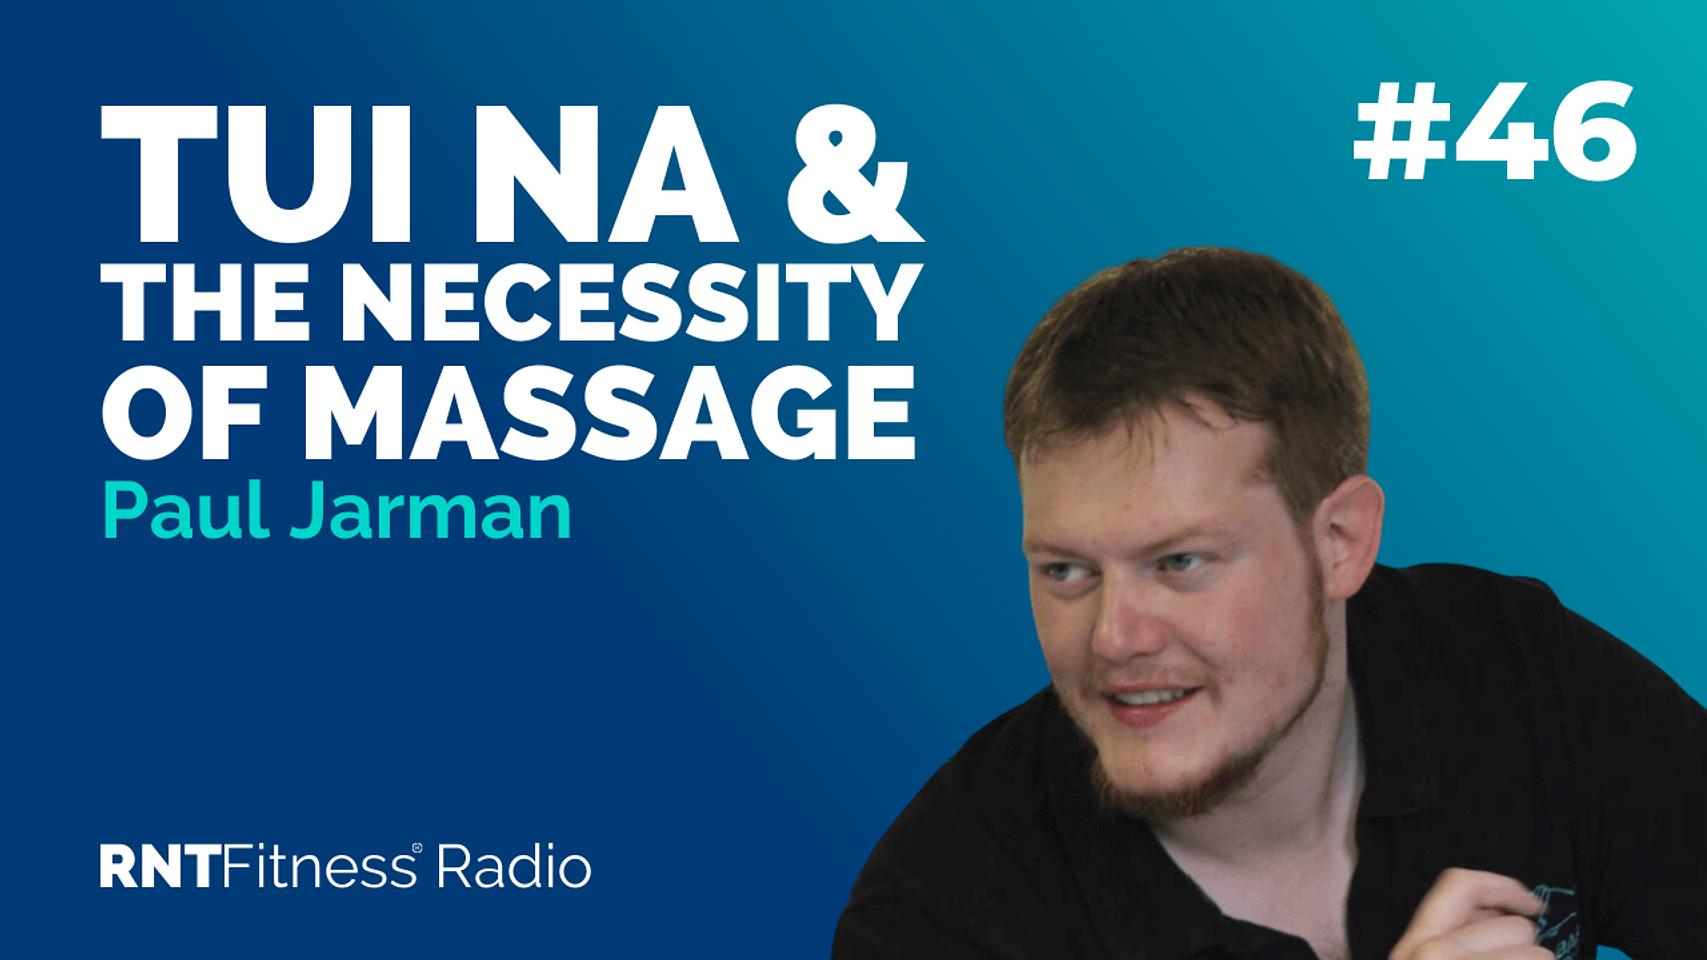 Ep. 46 - Tui Na & the Necessity of Massage w/ Paul Jarman